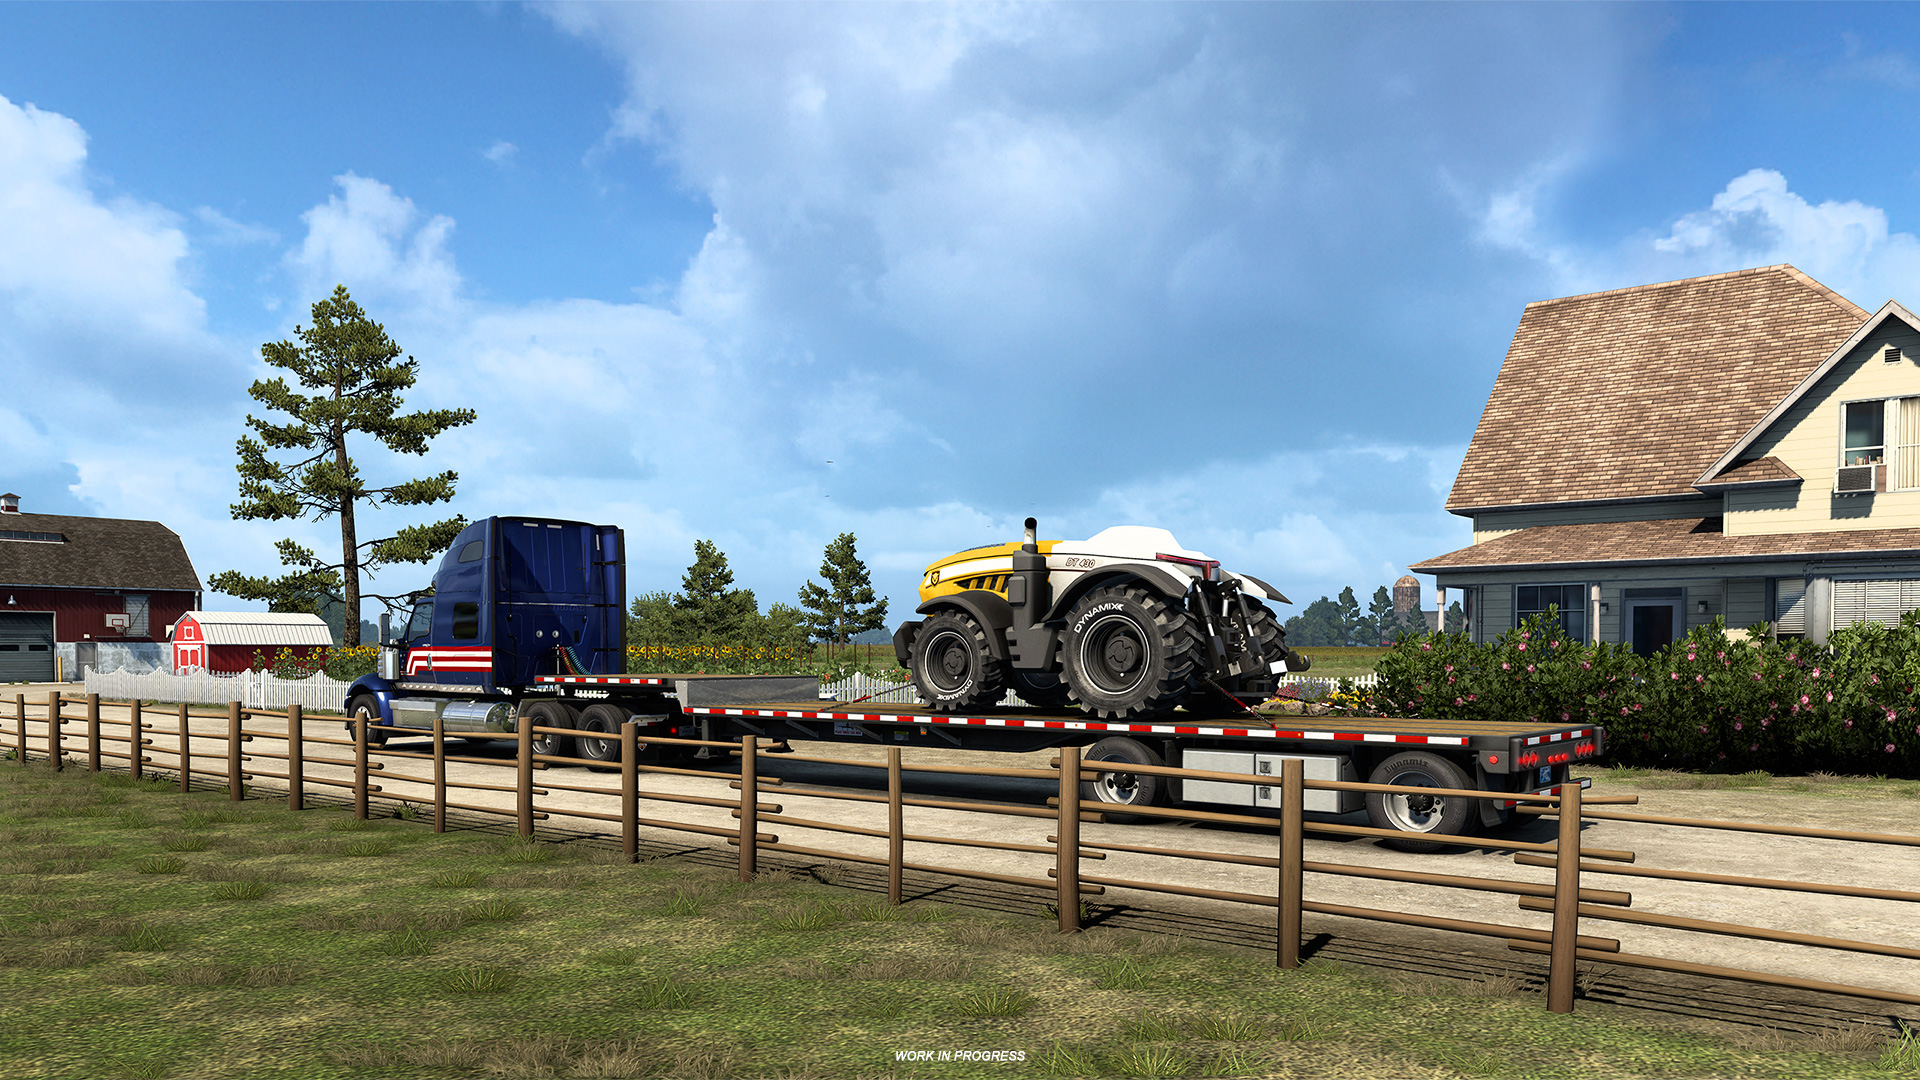 Steam Community :: American Truck Simulator